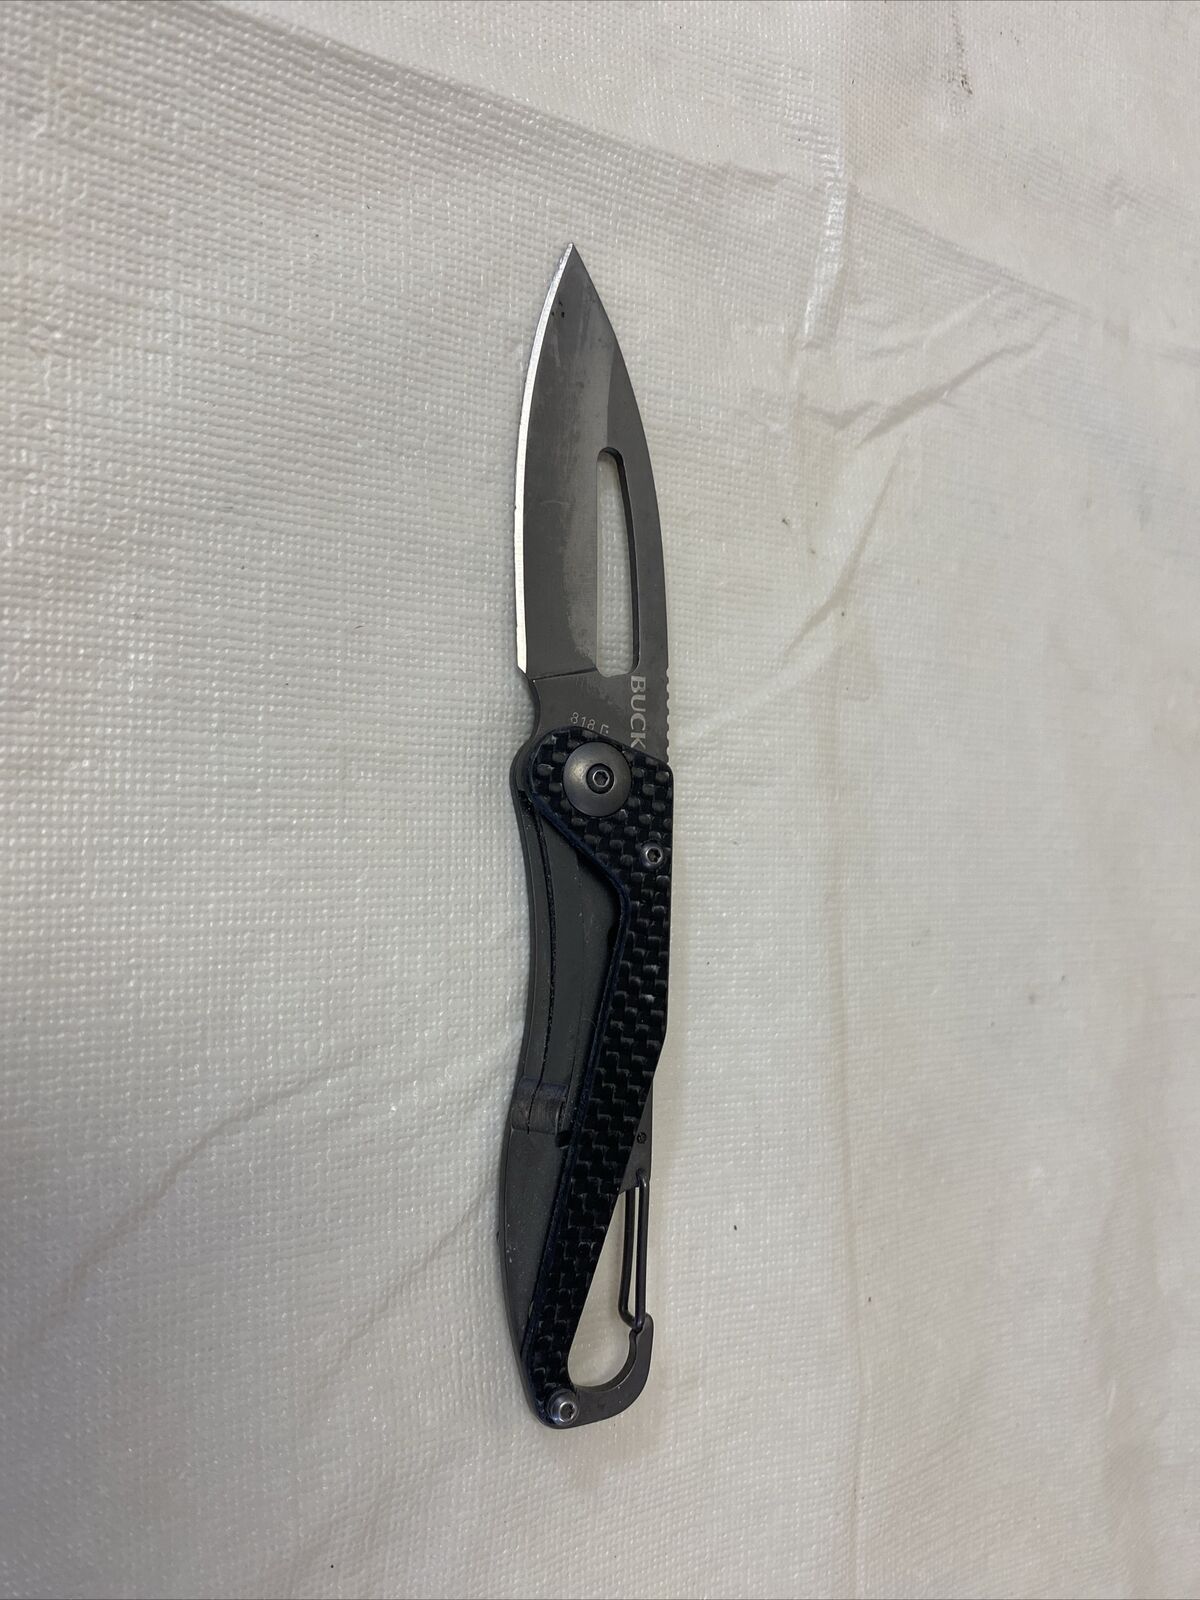 Buck 818 Apex Black Carbon Fiber Knife Discontinued Rare